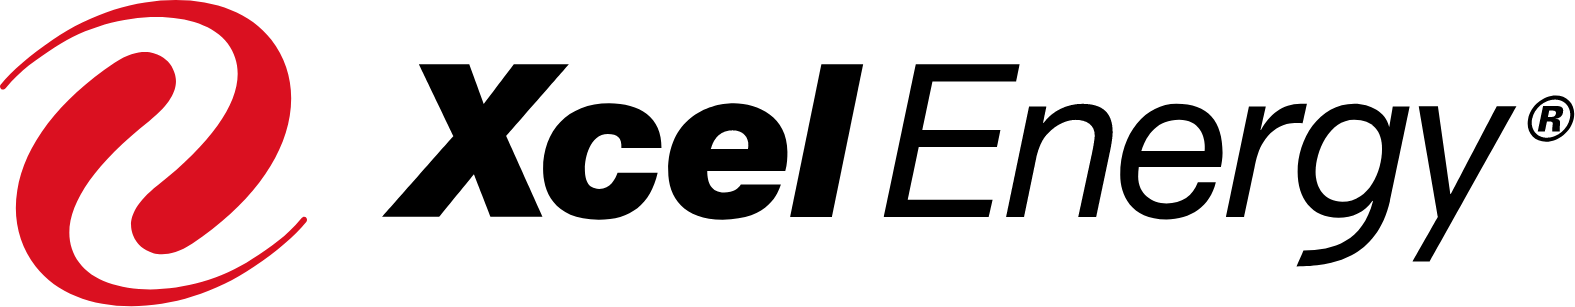 Xcel Energy logo large (transparent PNG)